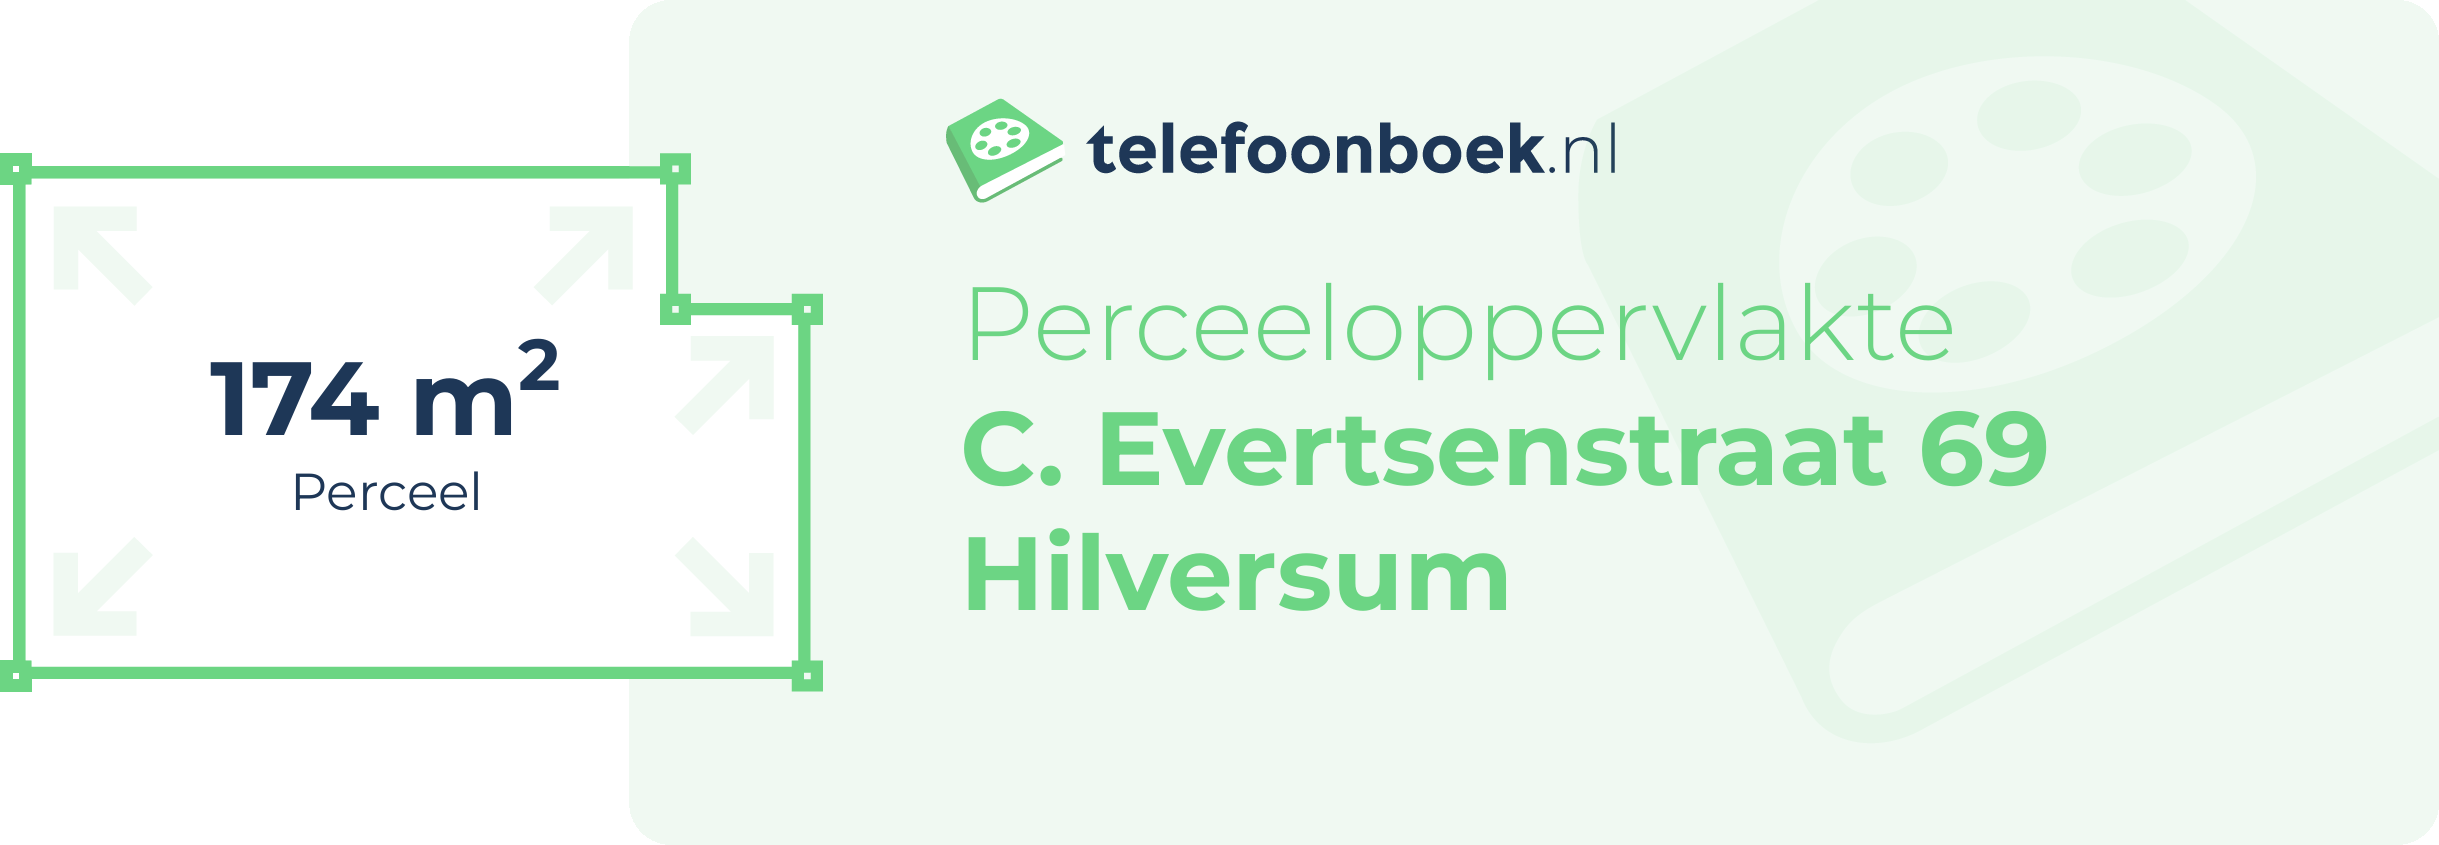 Perceeloppervlakte C. Evertsenstraat 69 Hilversum